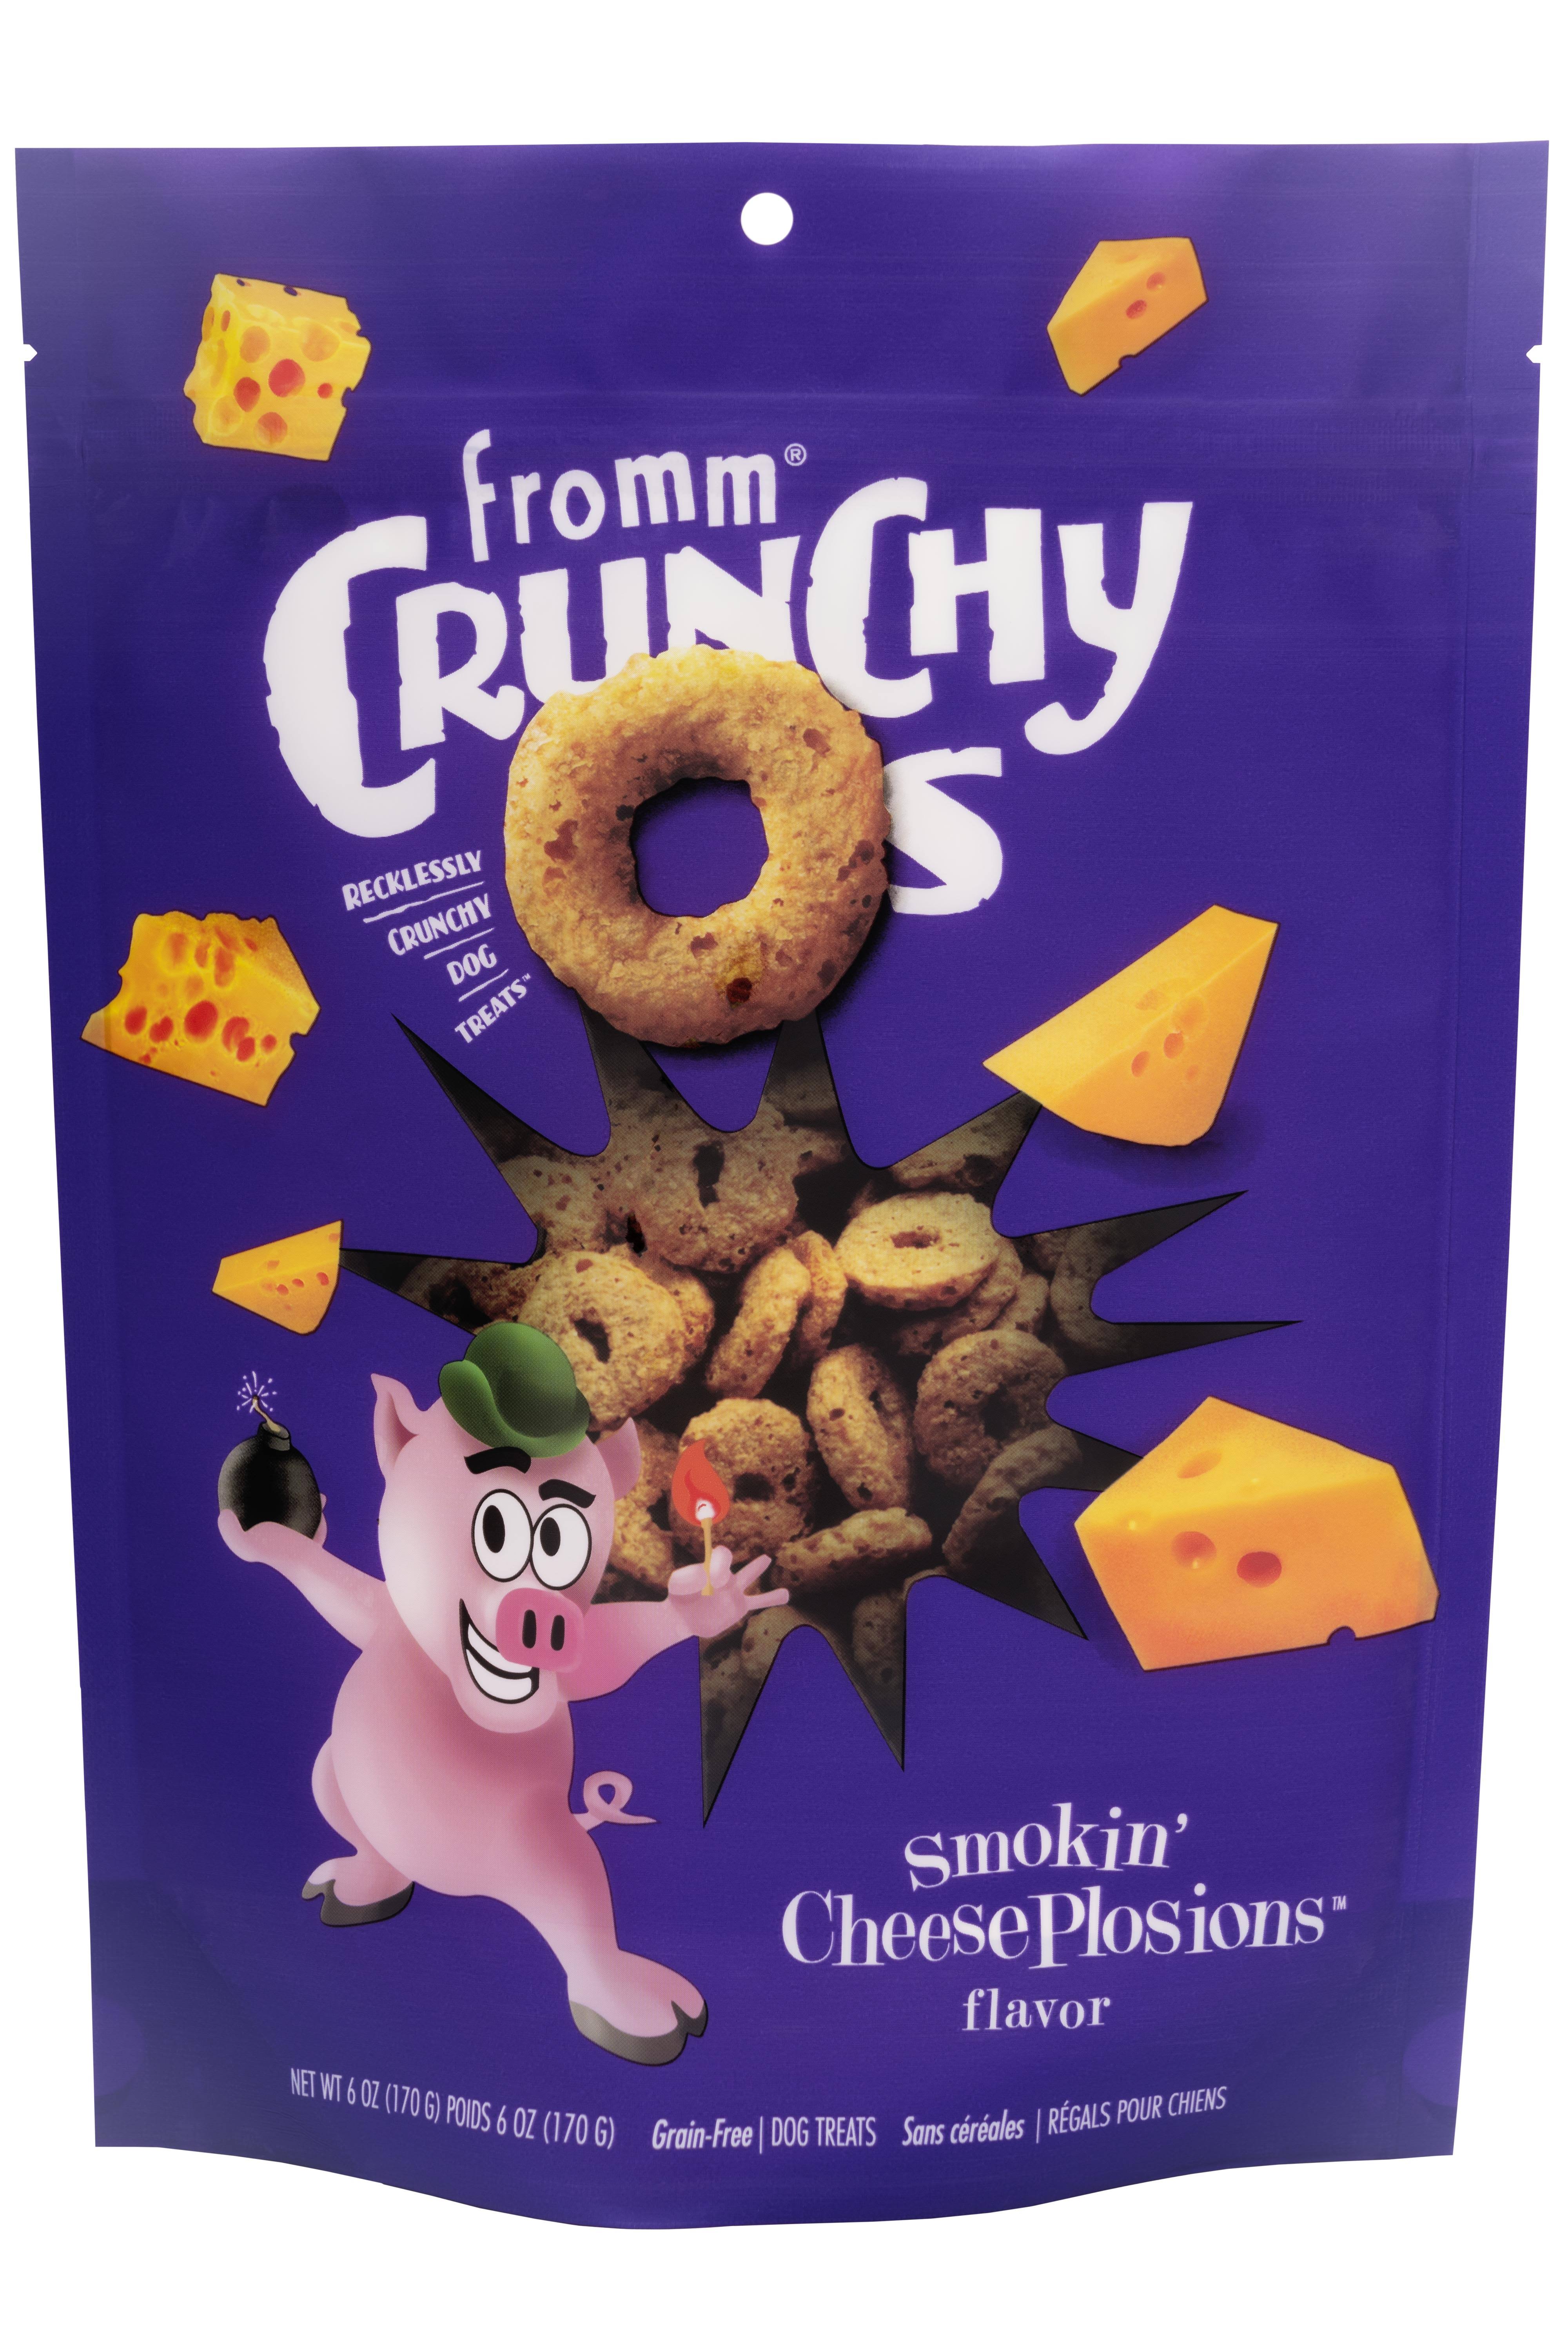 Fromm Crunchy OS Smokin' Cheeseplosions Dog Treats 6 oz